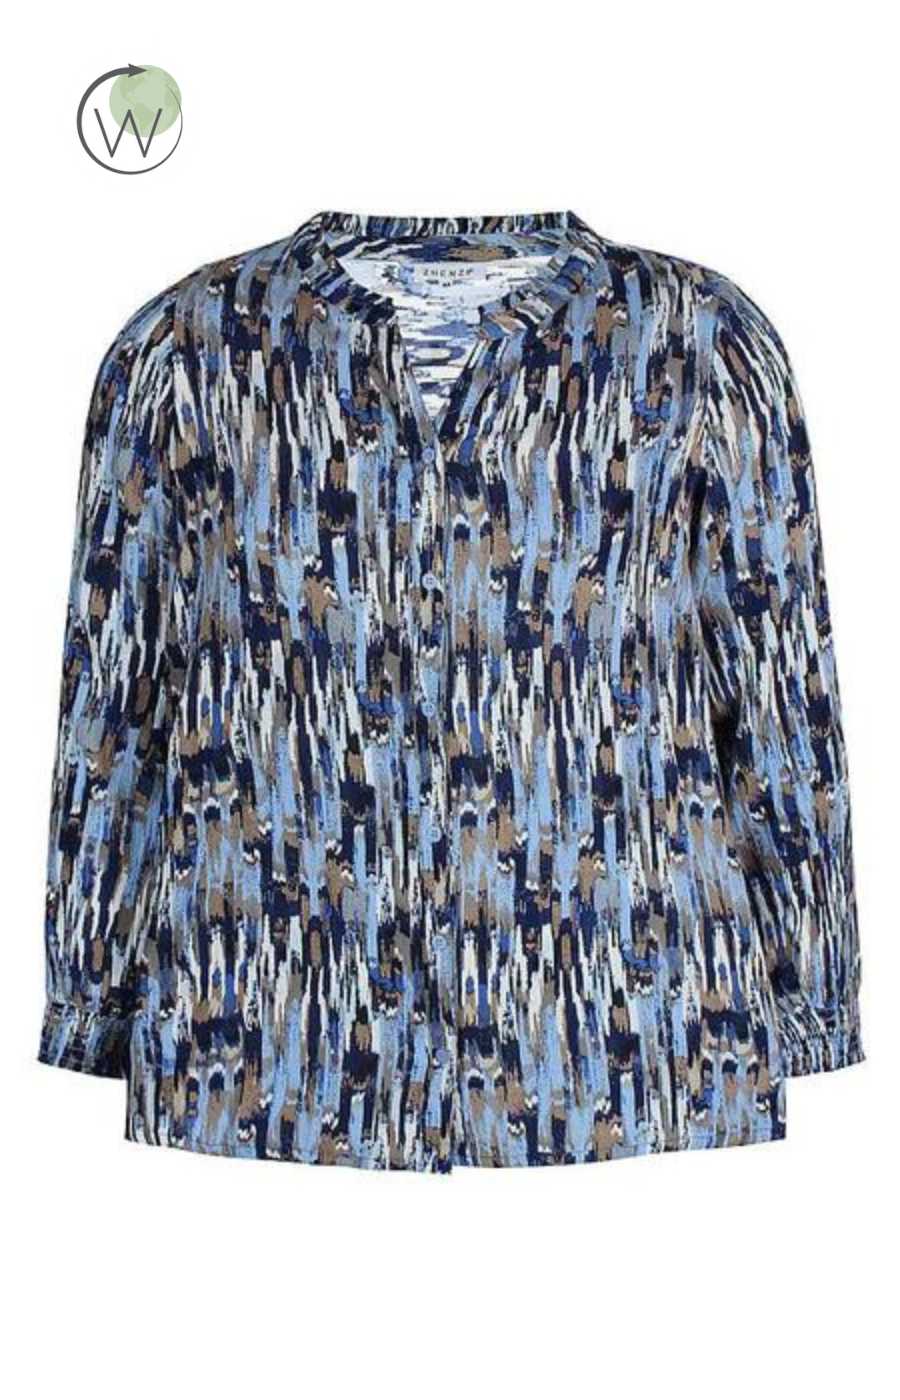 Zhenzi Tinley Blouse in Blue - Wardrobe Plus